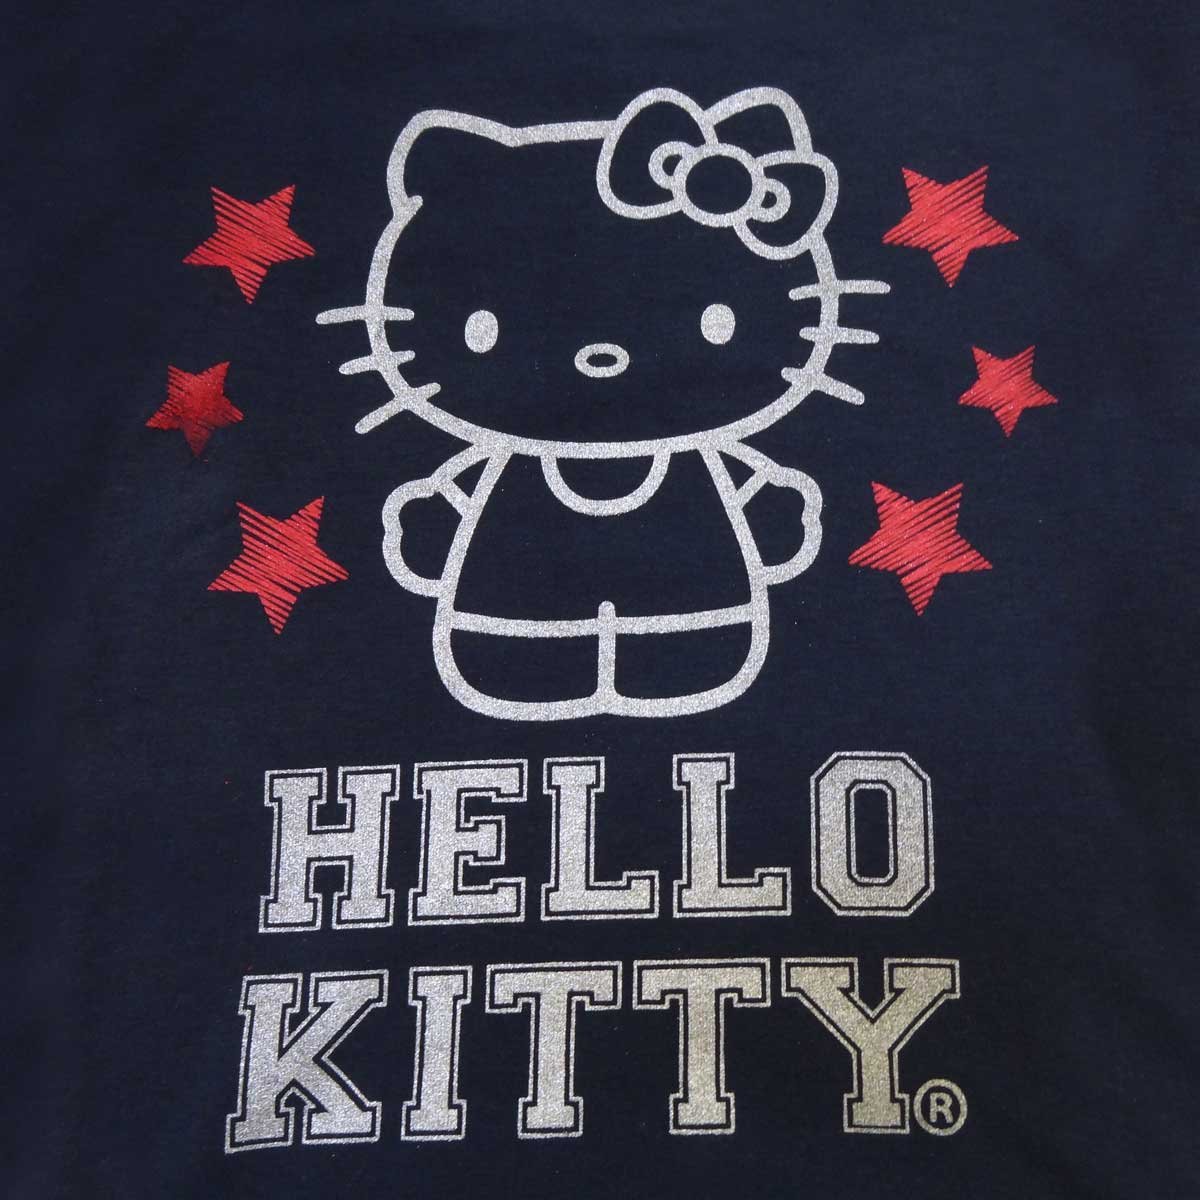 Playera Estampado Hello Kitty